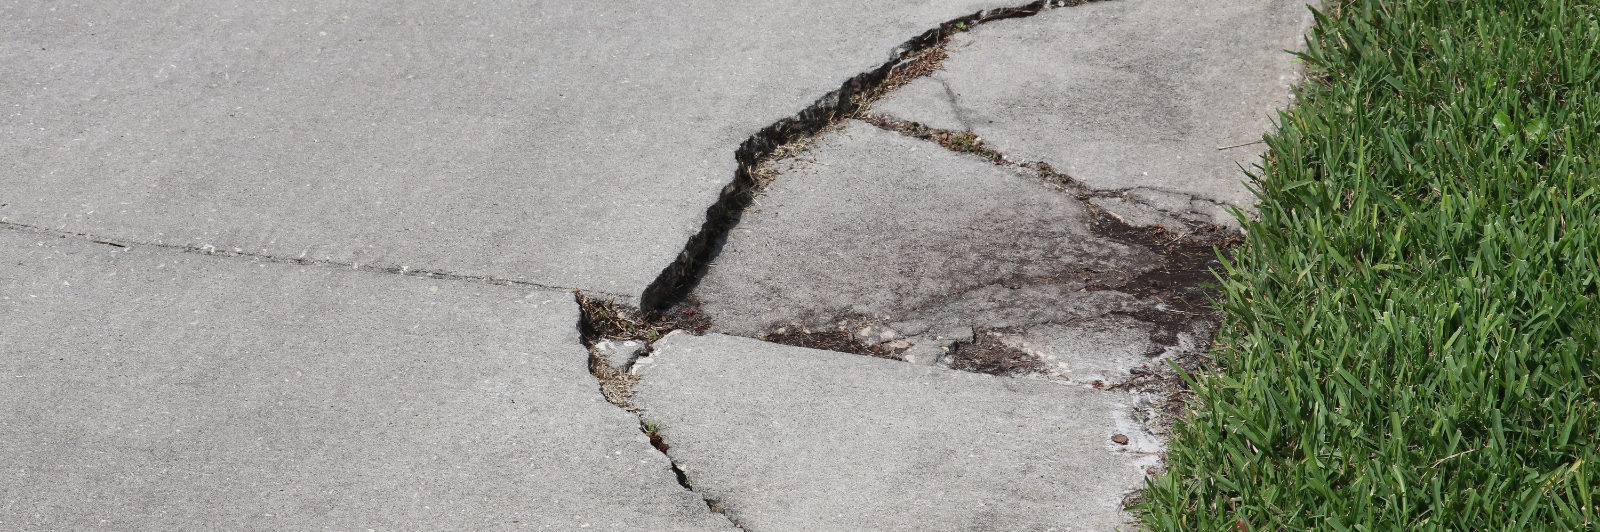 cracked-sidewalk-1600x533